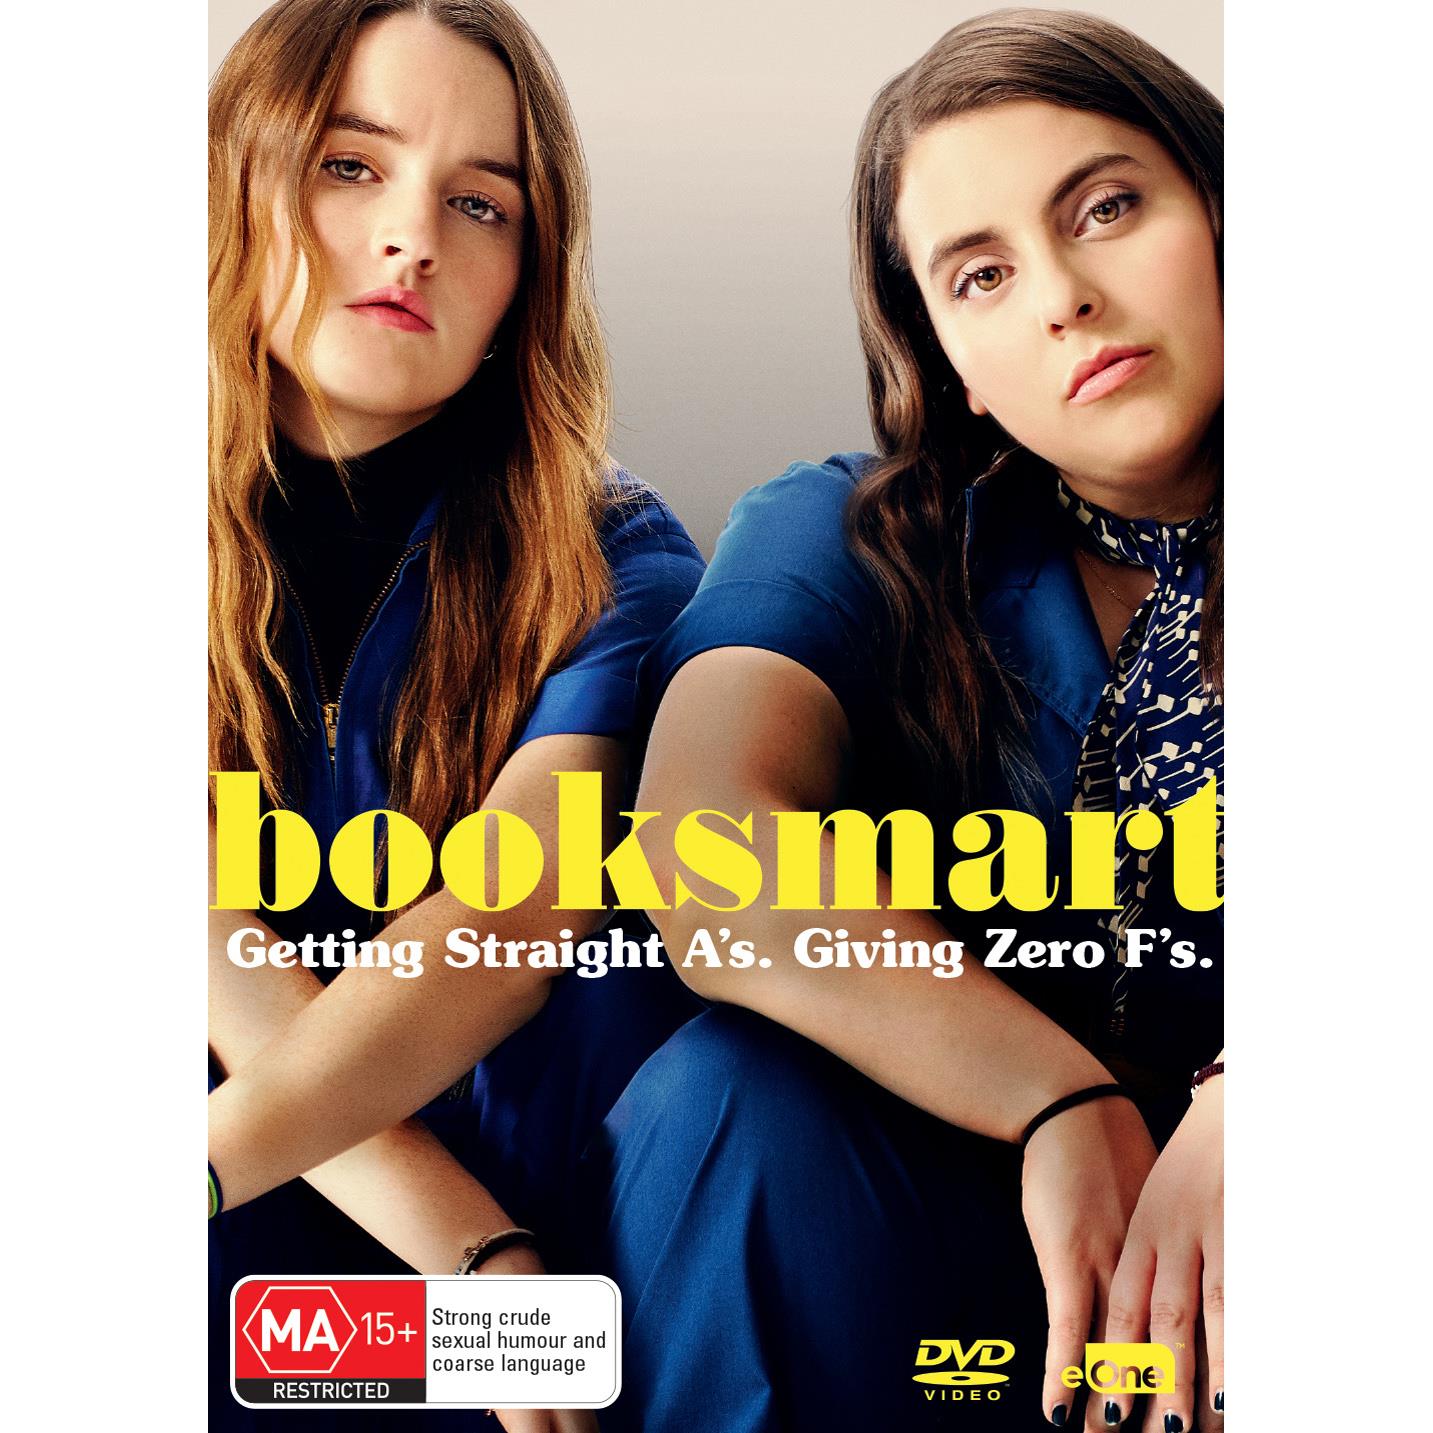 World Premiere of Booksmart at SXSW 2019 [Video]